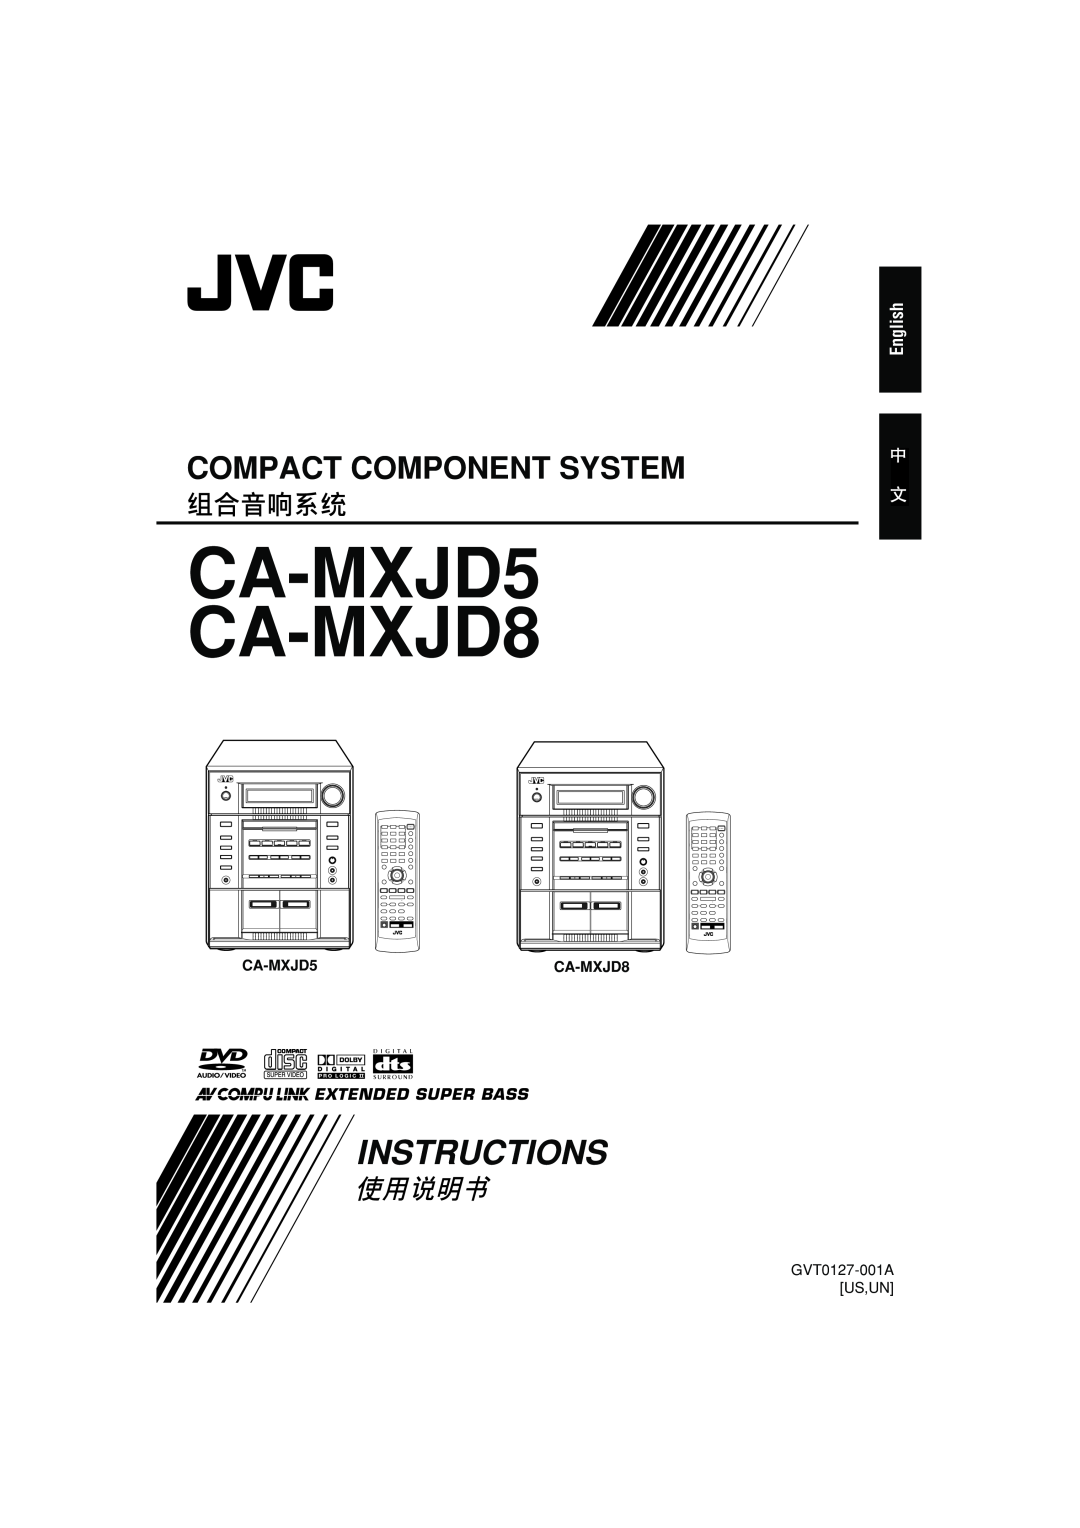 JVC manual CA-MXJD5 CA-MXJD8, Instructions, Compact Component System, English, Extended Super Bass, GVT0127-001AUS,UN 